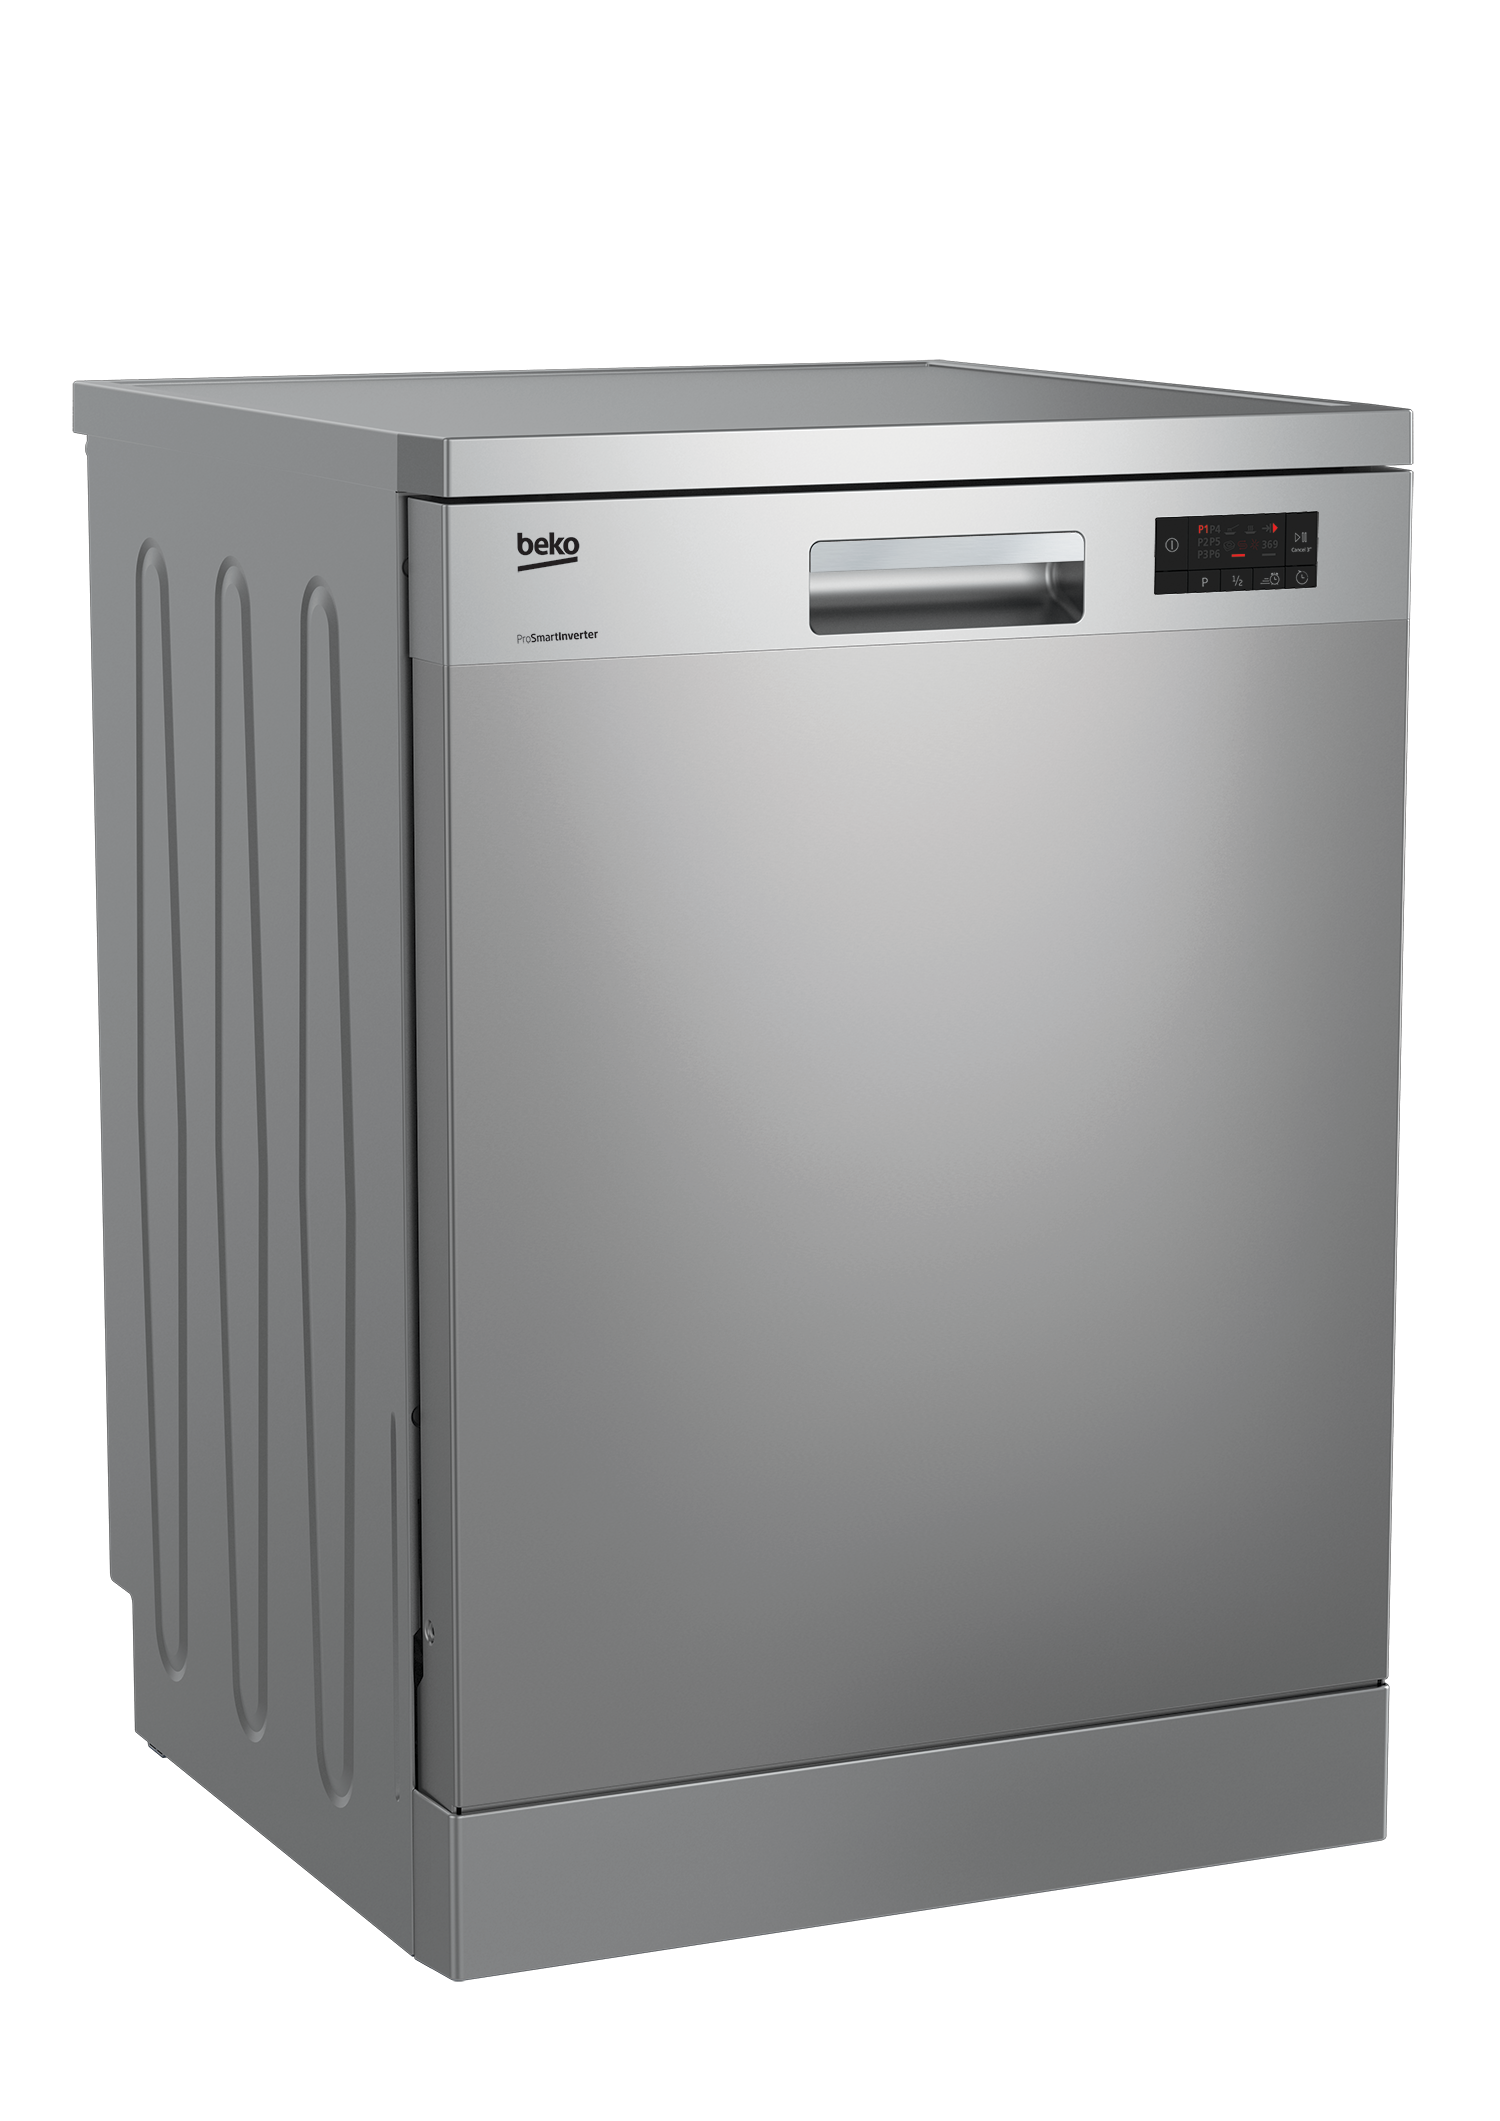 ماشین ظرفشویی بکو مدل DFN28422S - قیمت ظرفشویی بکو 28422s - بکو لند